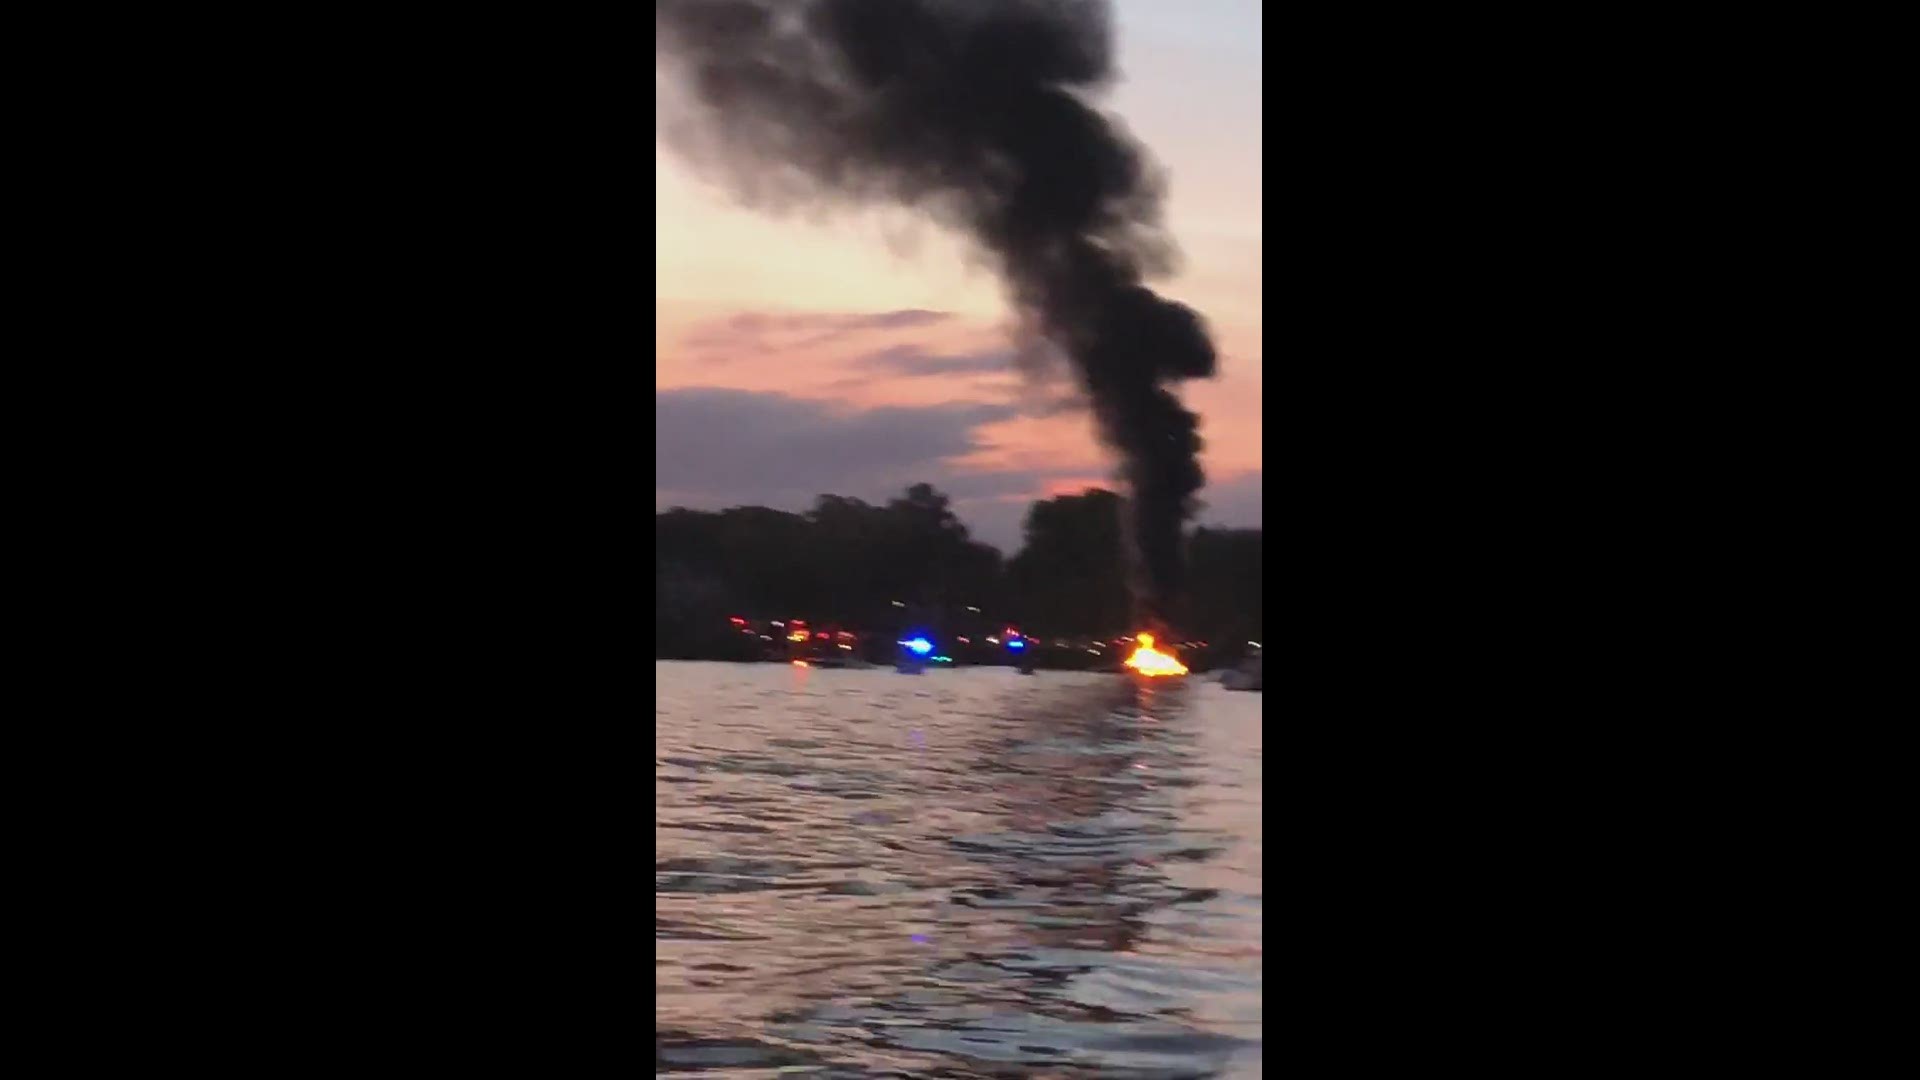 Boat fire at Smith's Bay on Lake Minnetonka
Credit: Katherine Blanchard